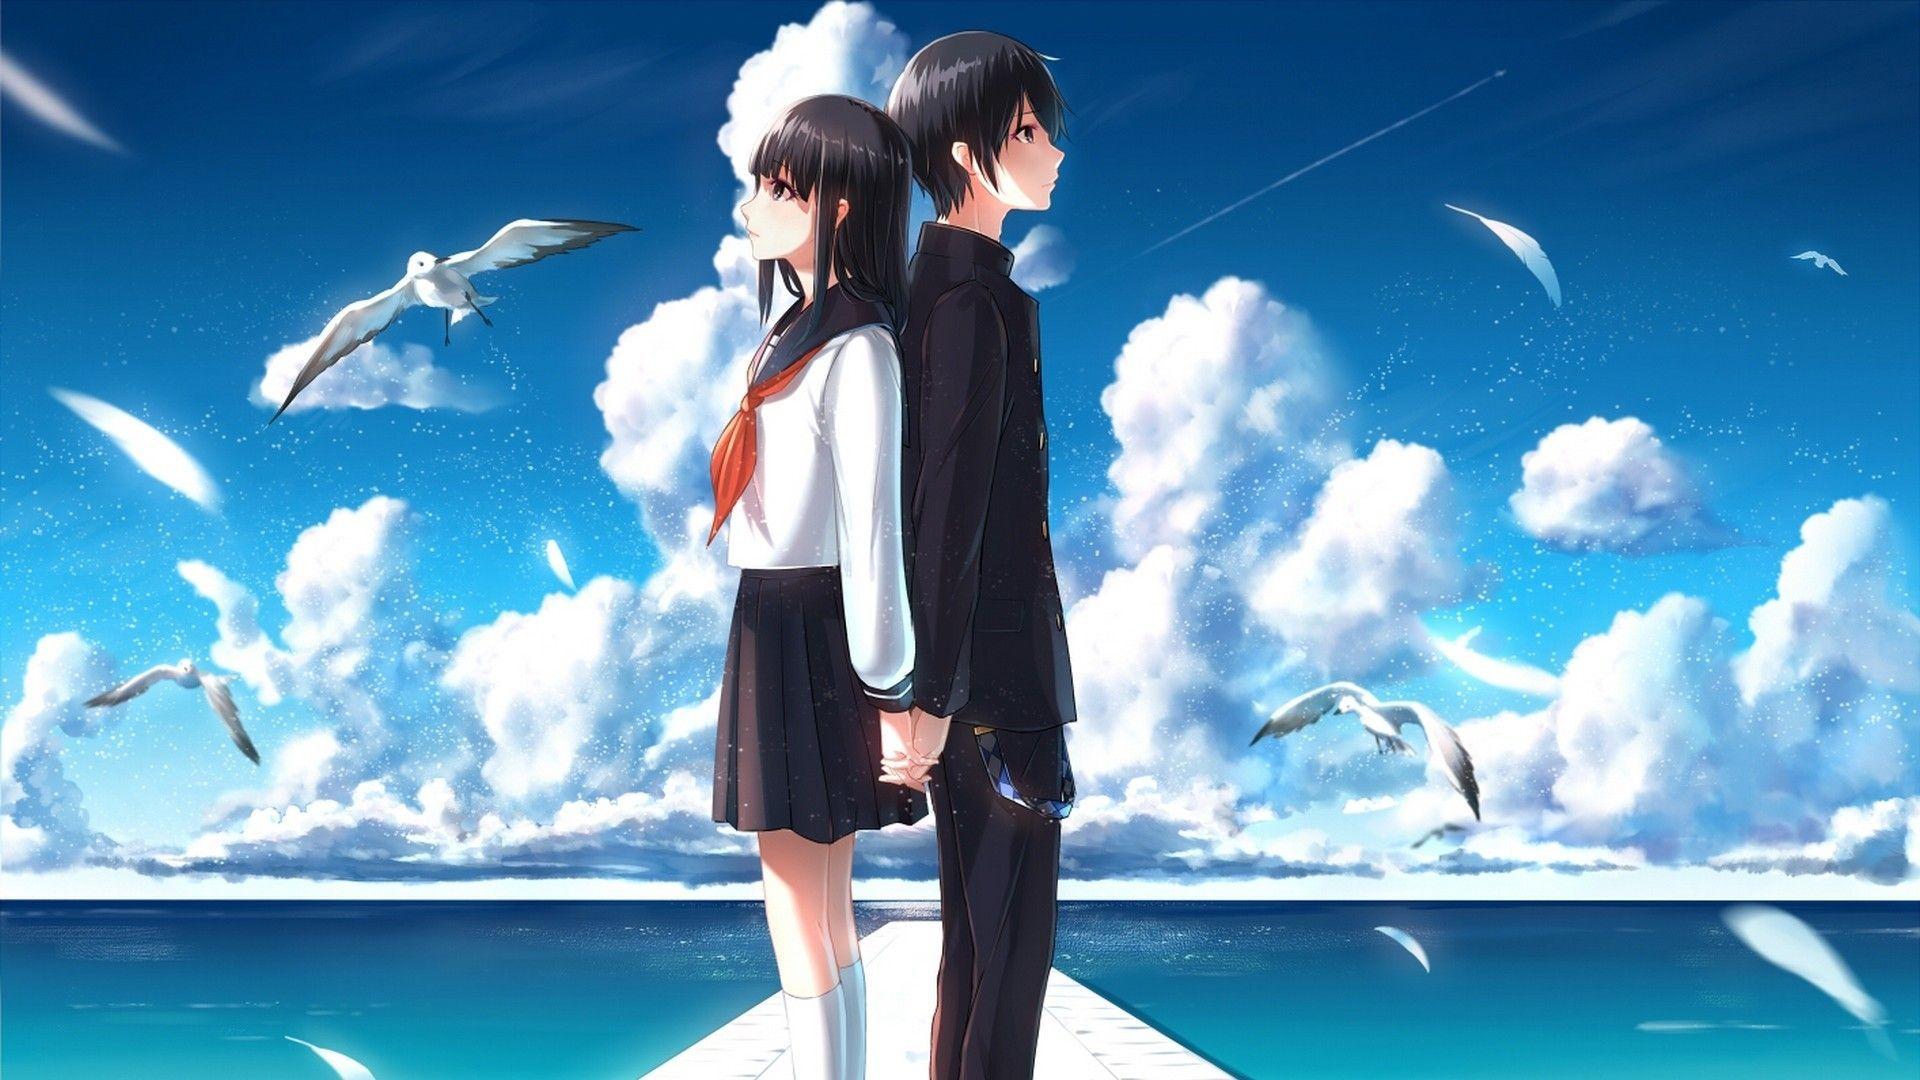 Anime Romance Wallpaper Free Anime Romance